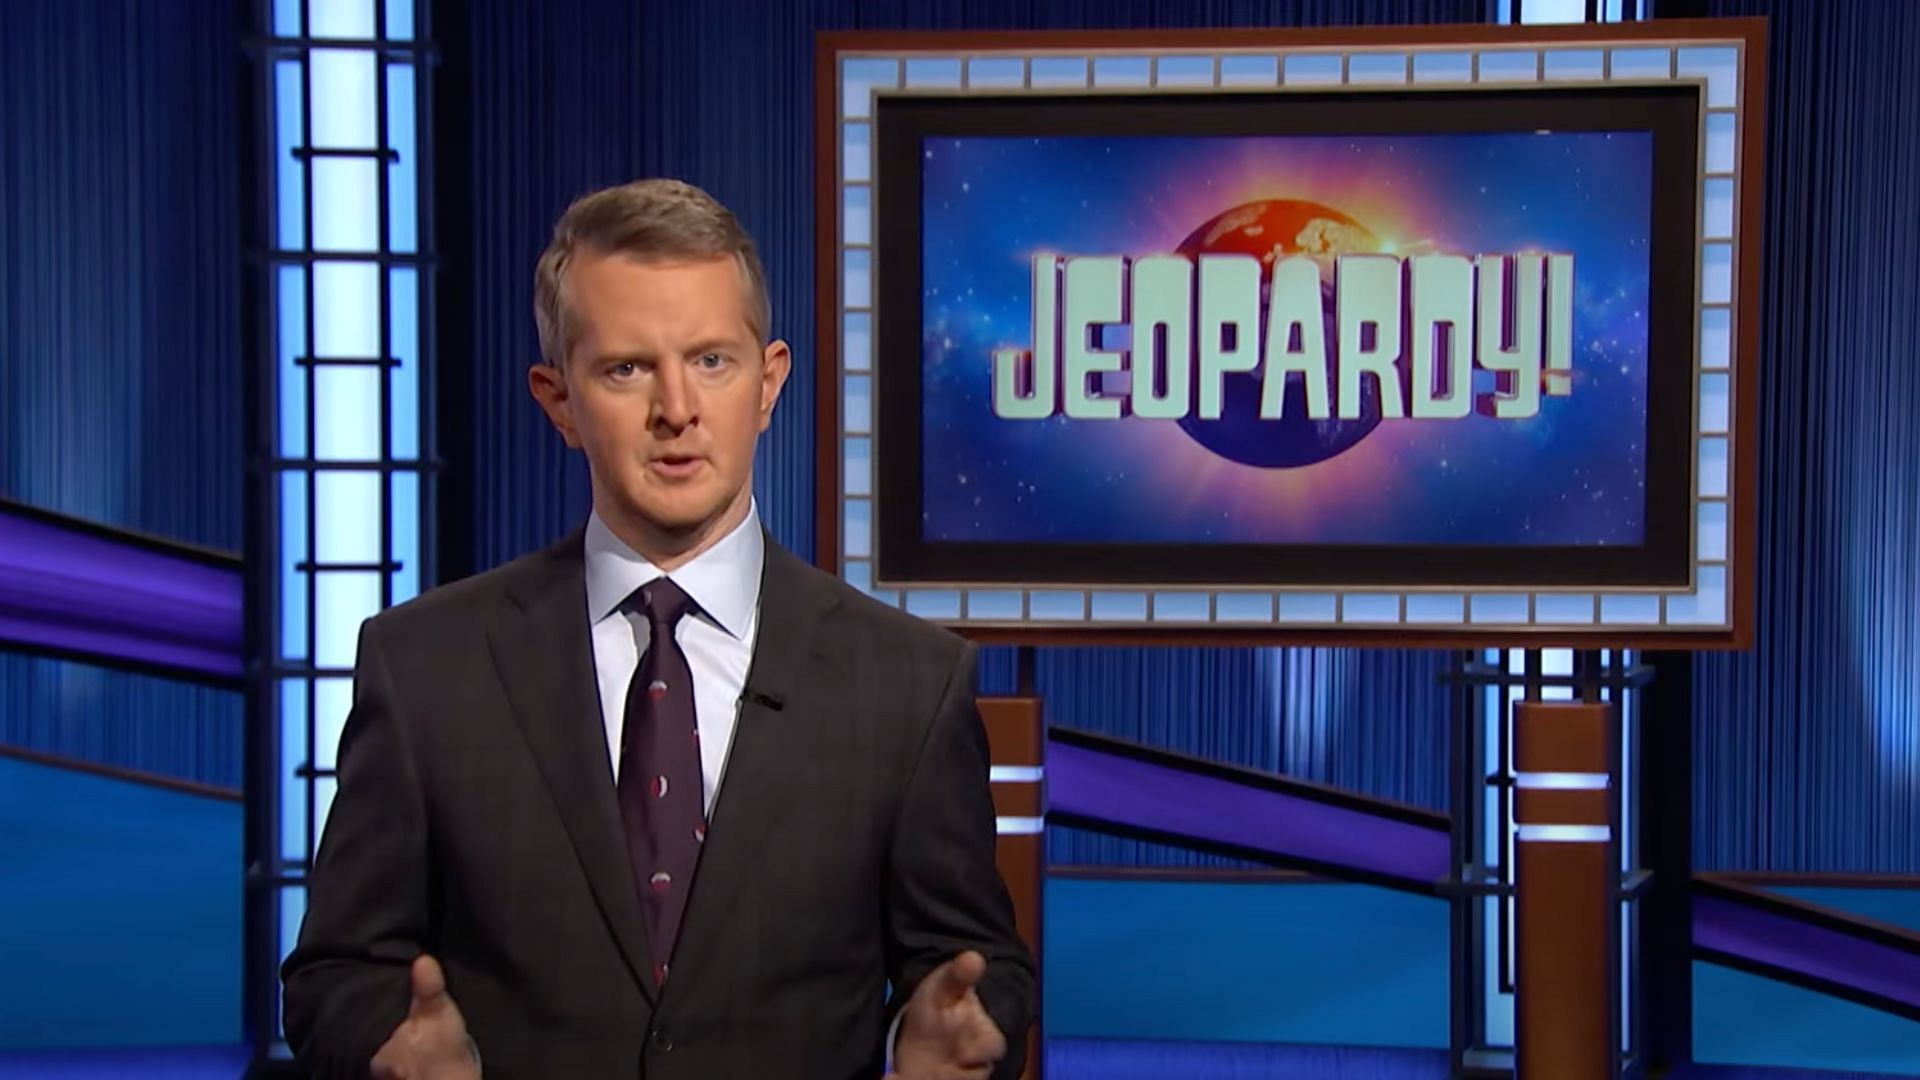 Ken Jennings hosted the July 26 episode of Jeopardy! (Image via Jeopardy)